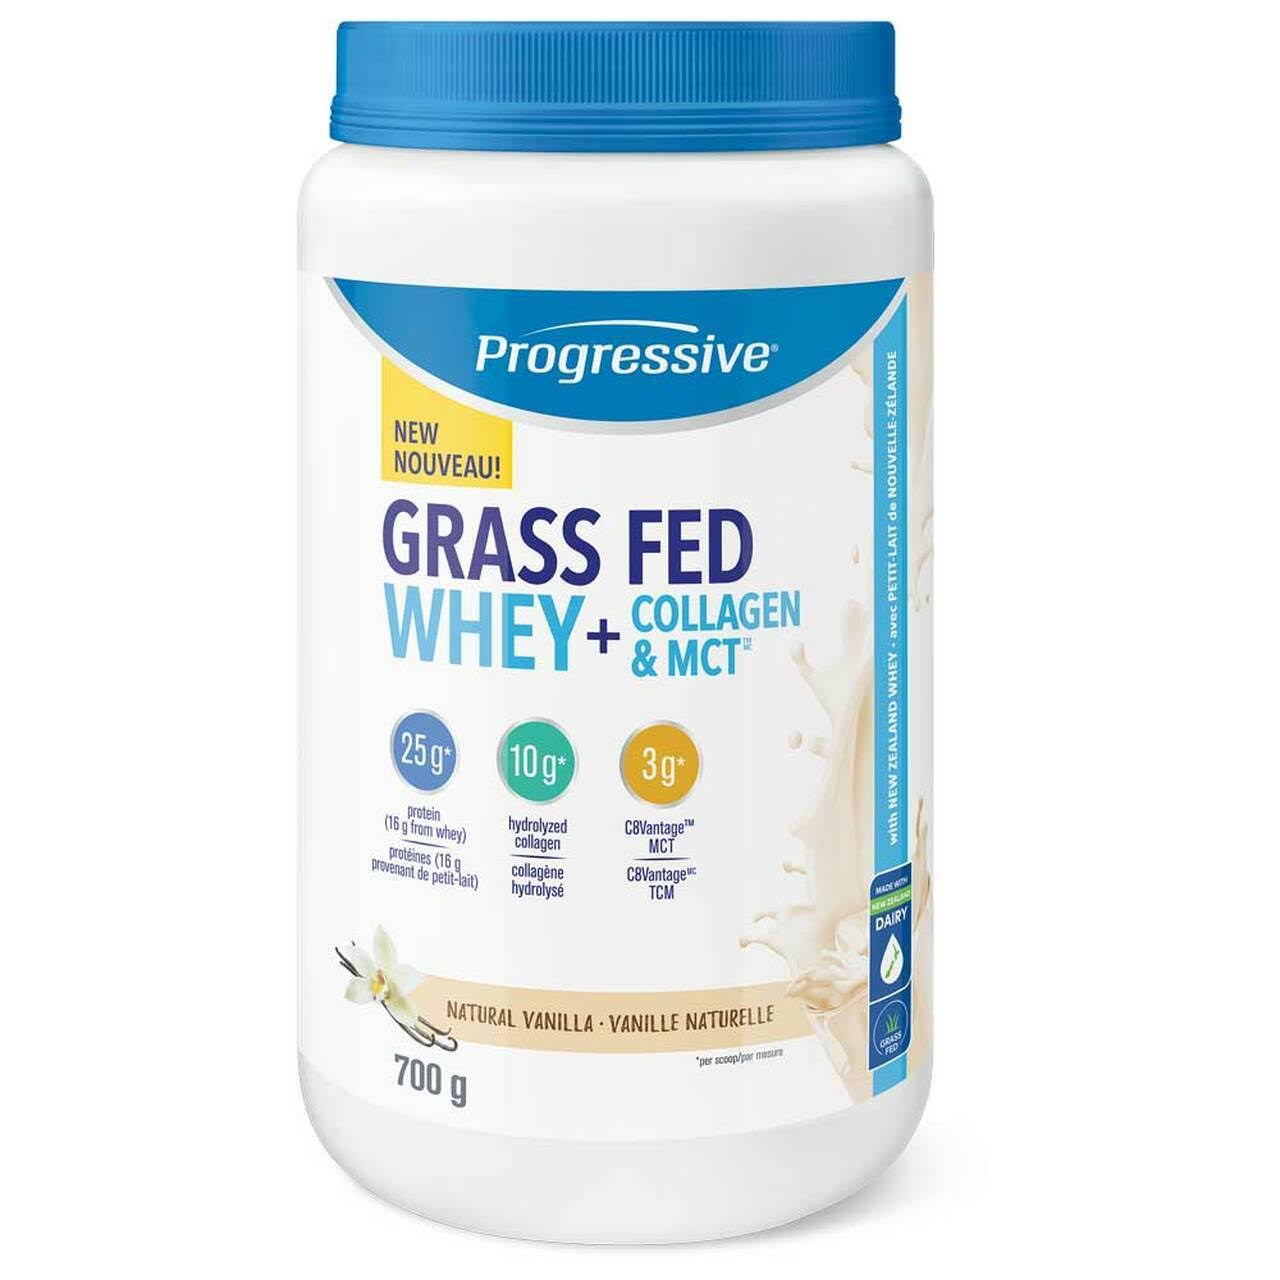 Progressive Grass Fed Whey + Collagen & MCT, Vanilla - 700g